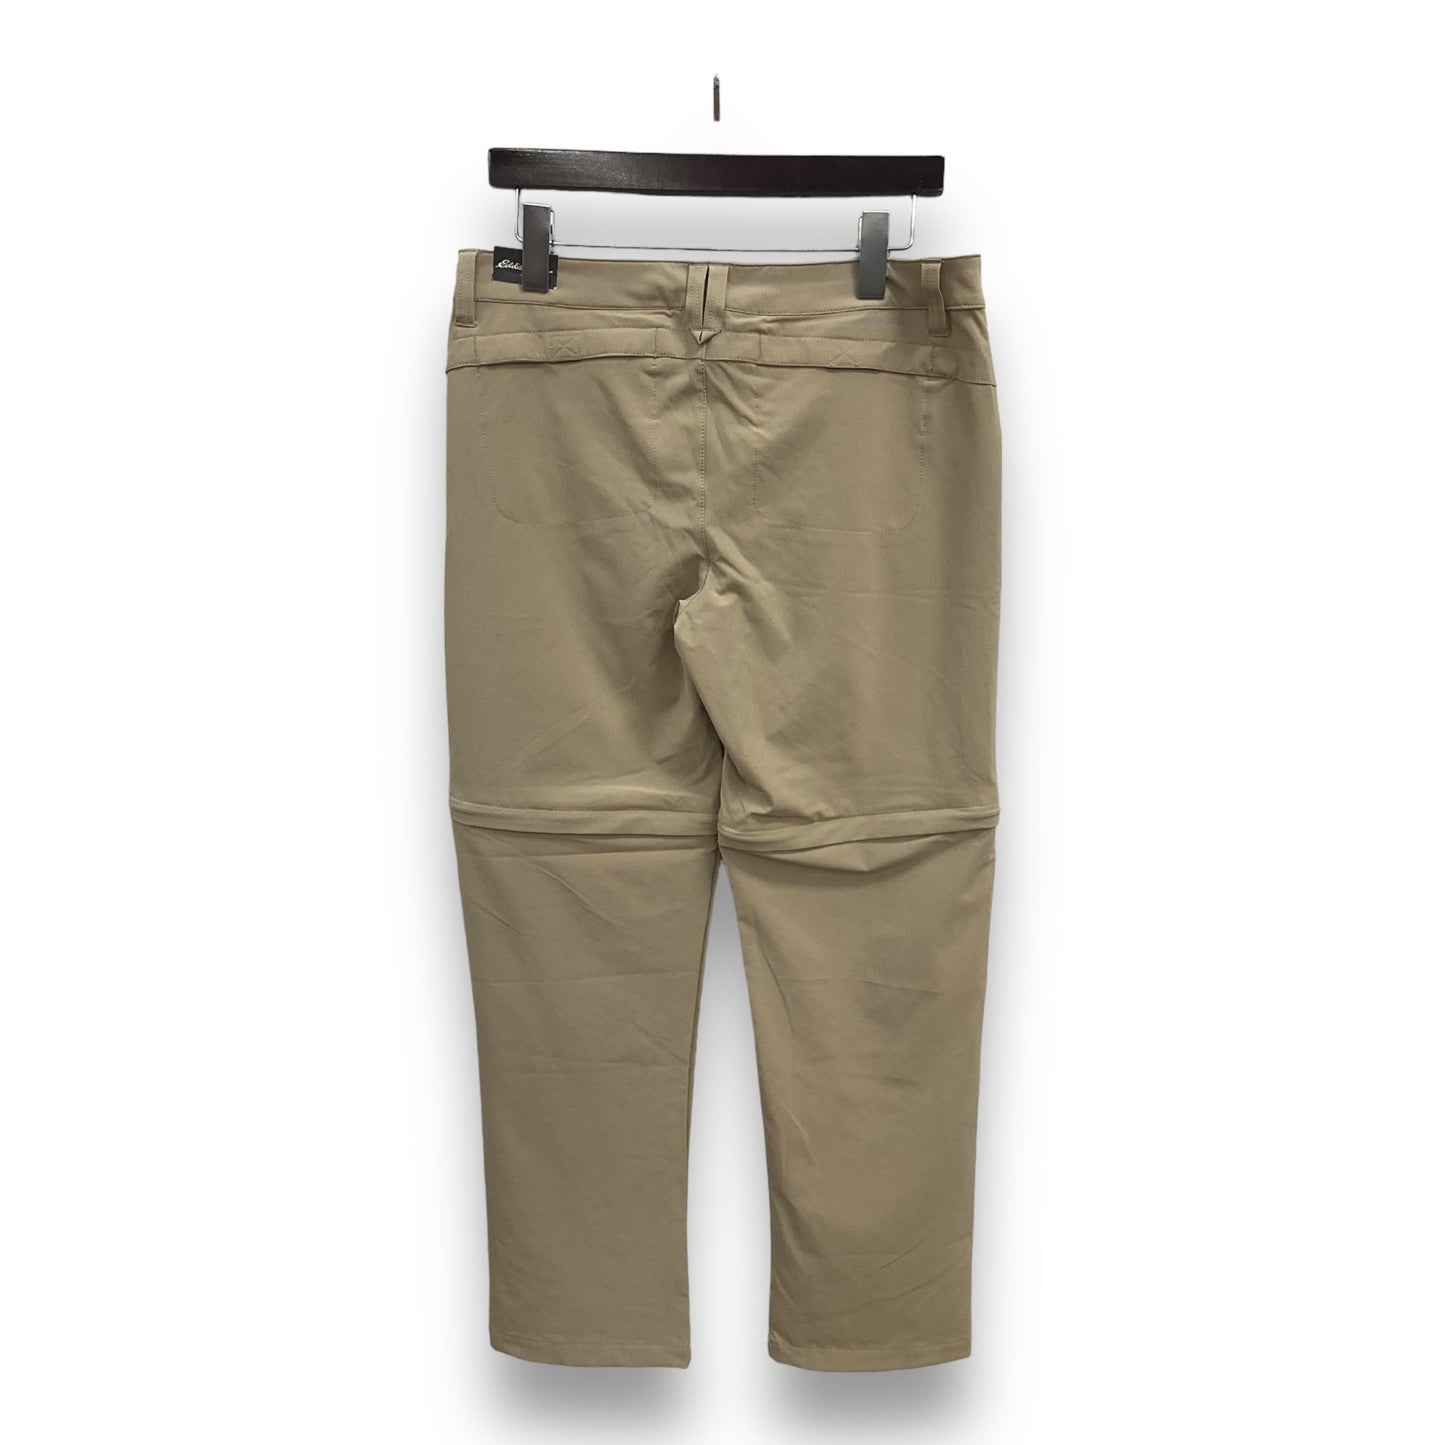 Pants Cargo & Utility By Eddie Bauer  Size: 8